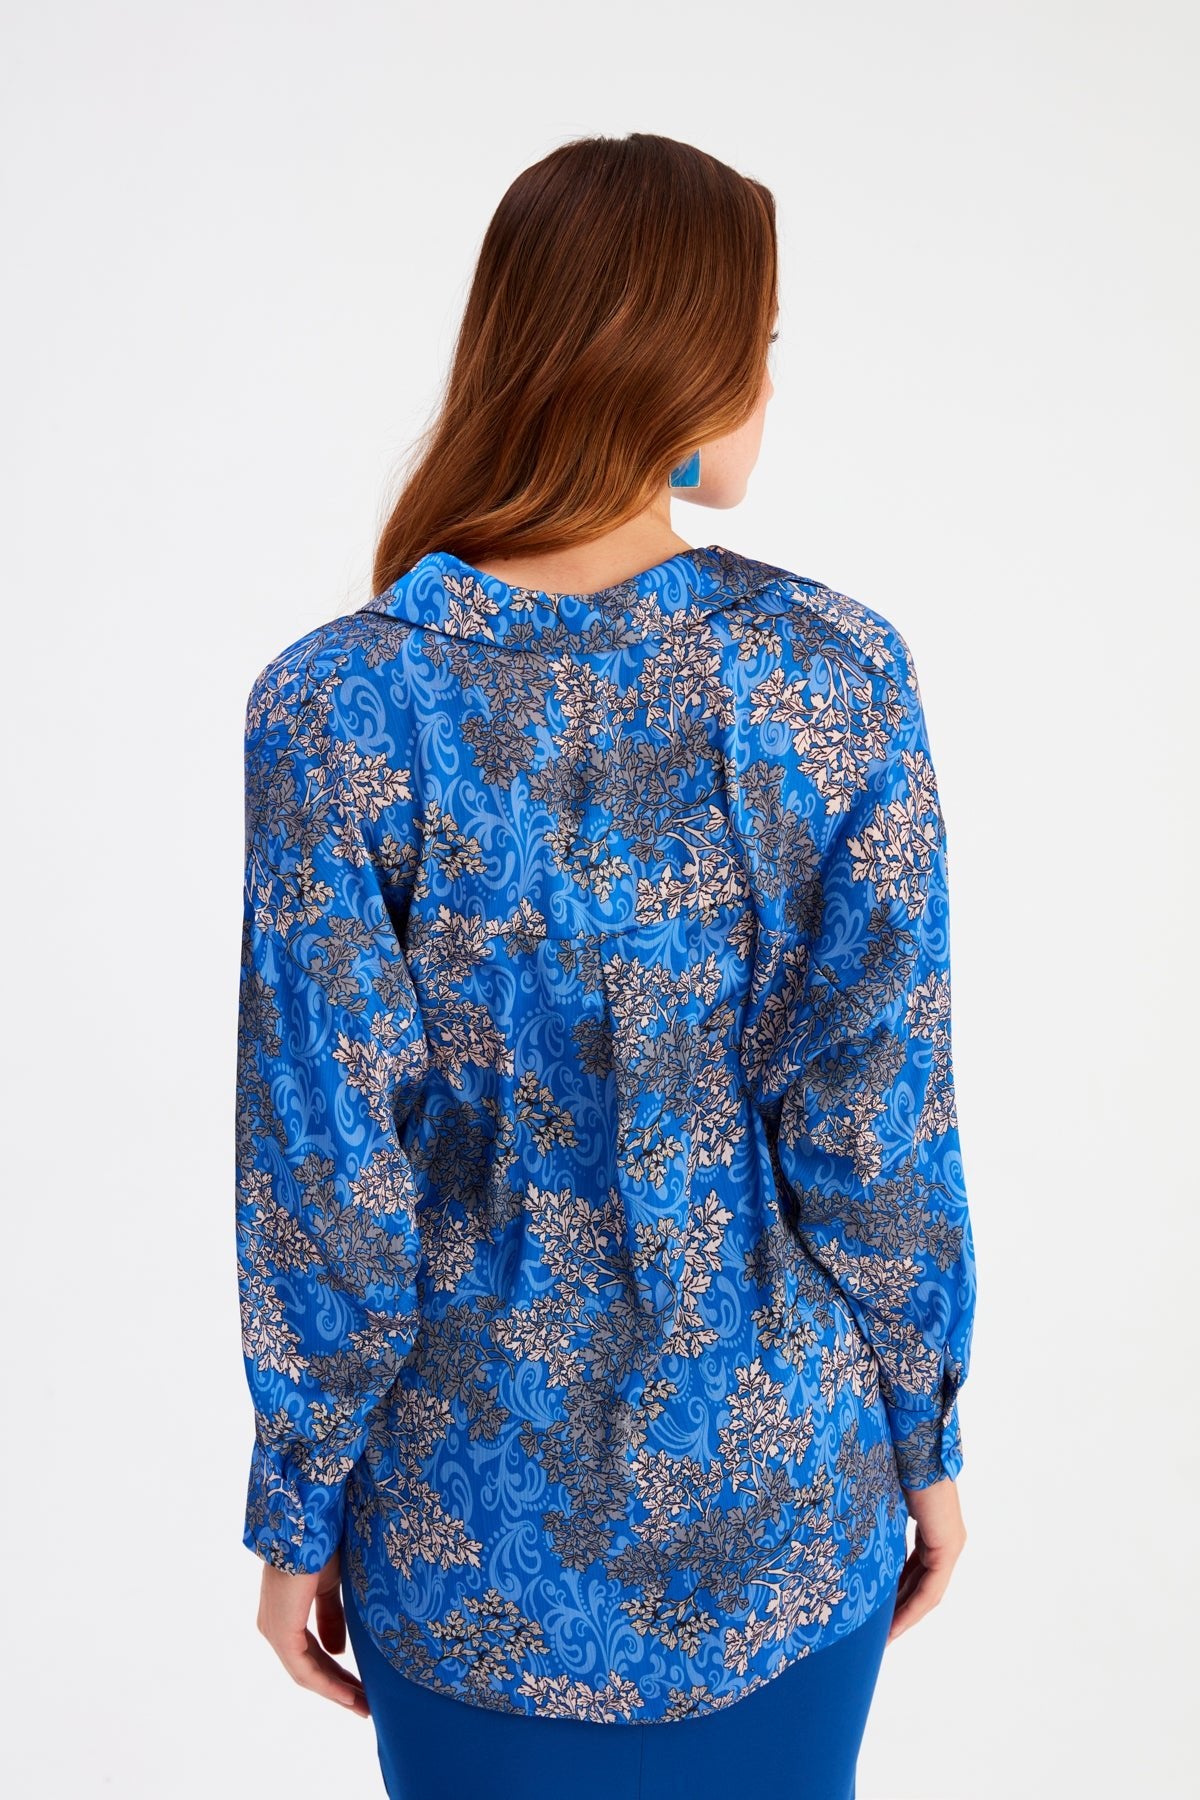 Dolman Sleeve Patterned Shirt - Azure Blue - Top - LussoCA